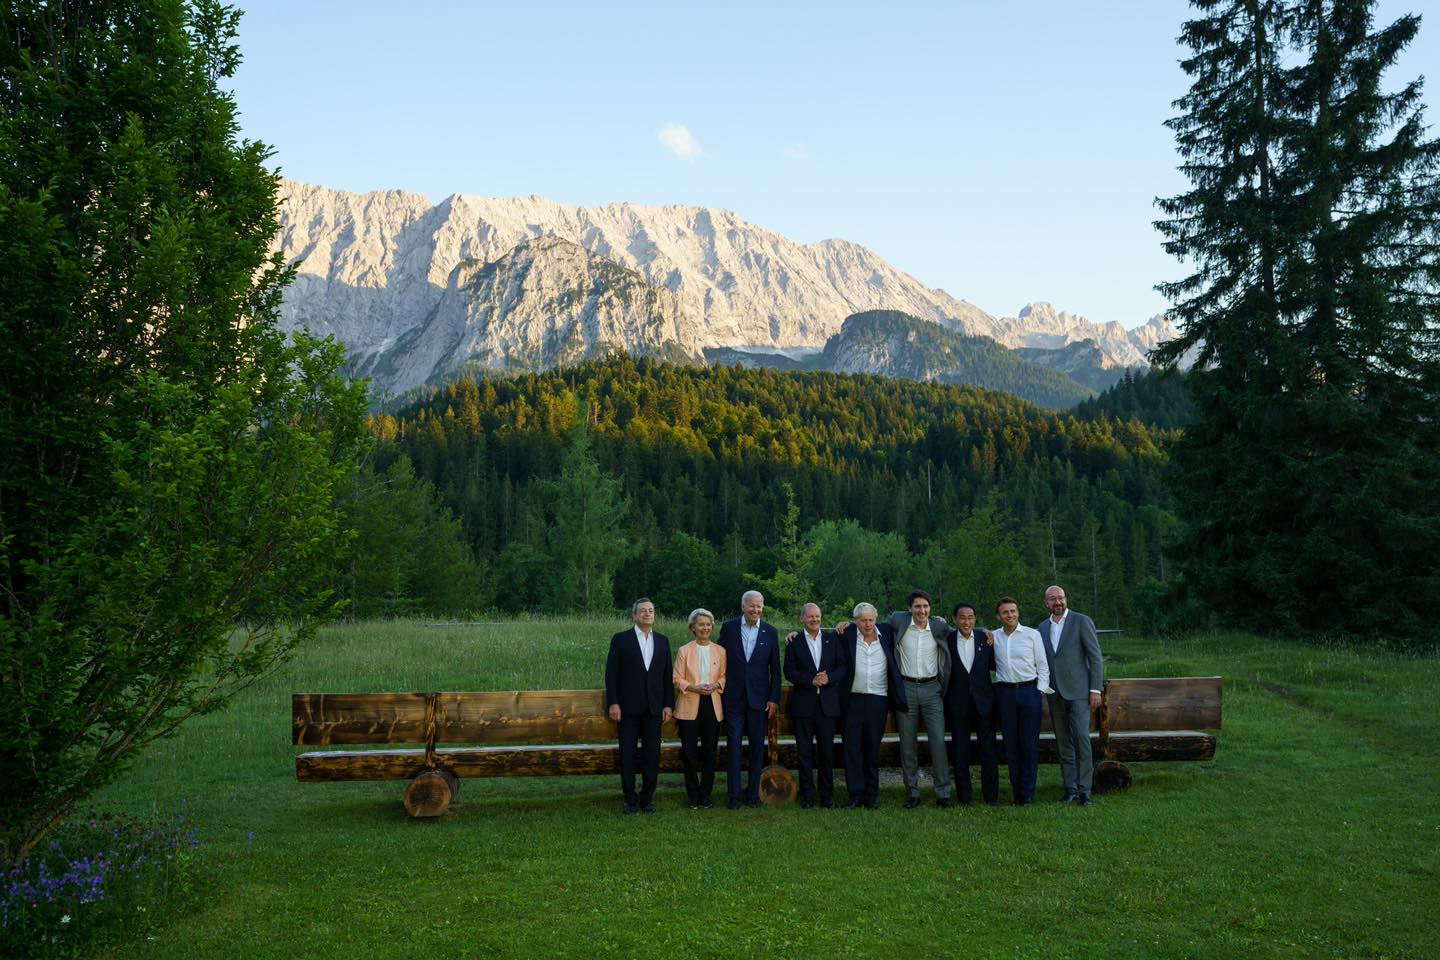 G7 summit attendees